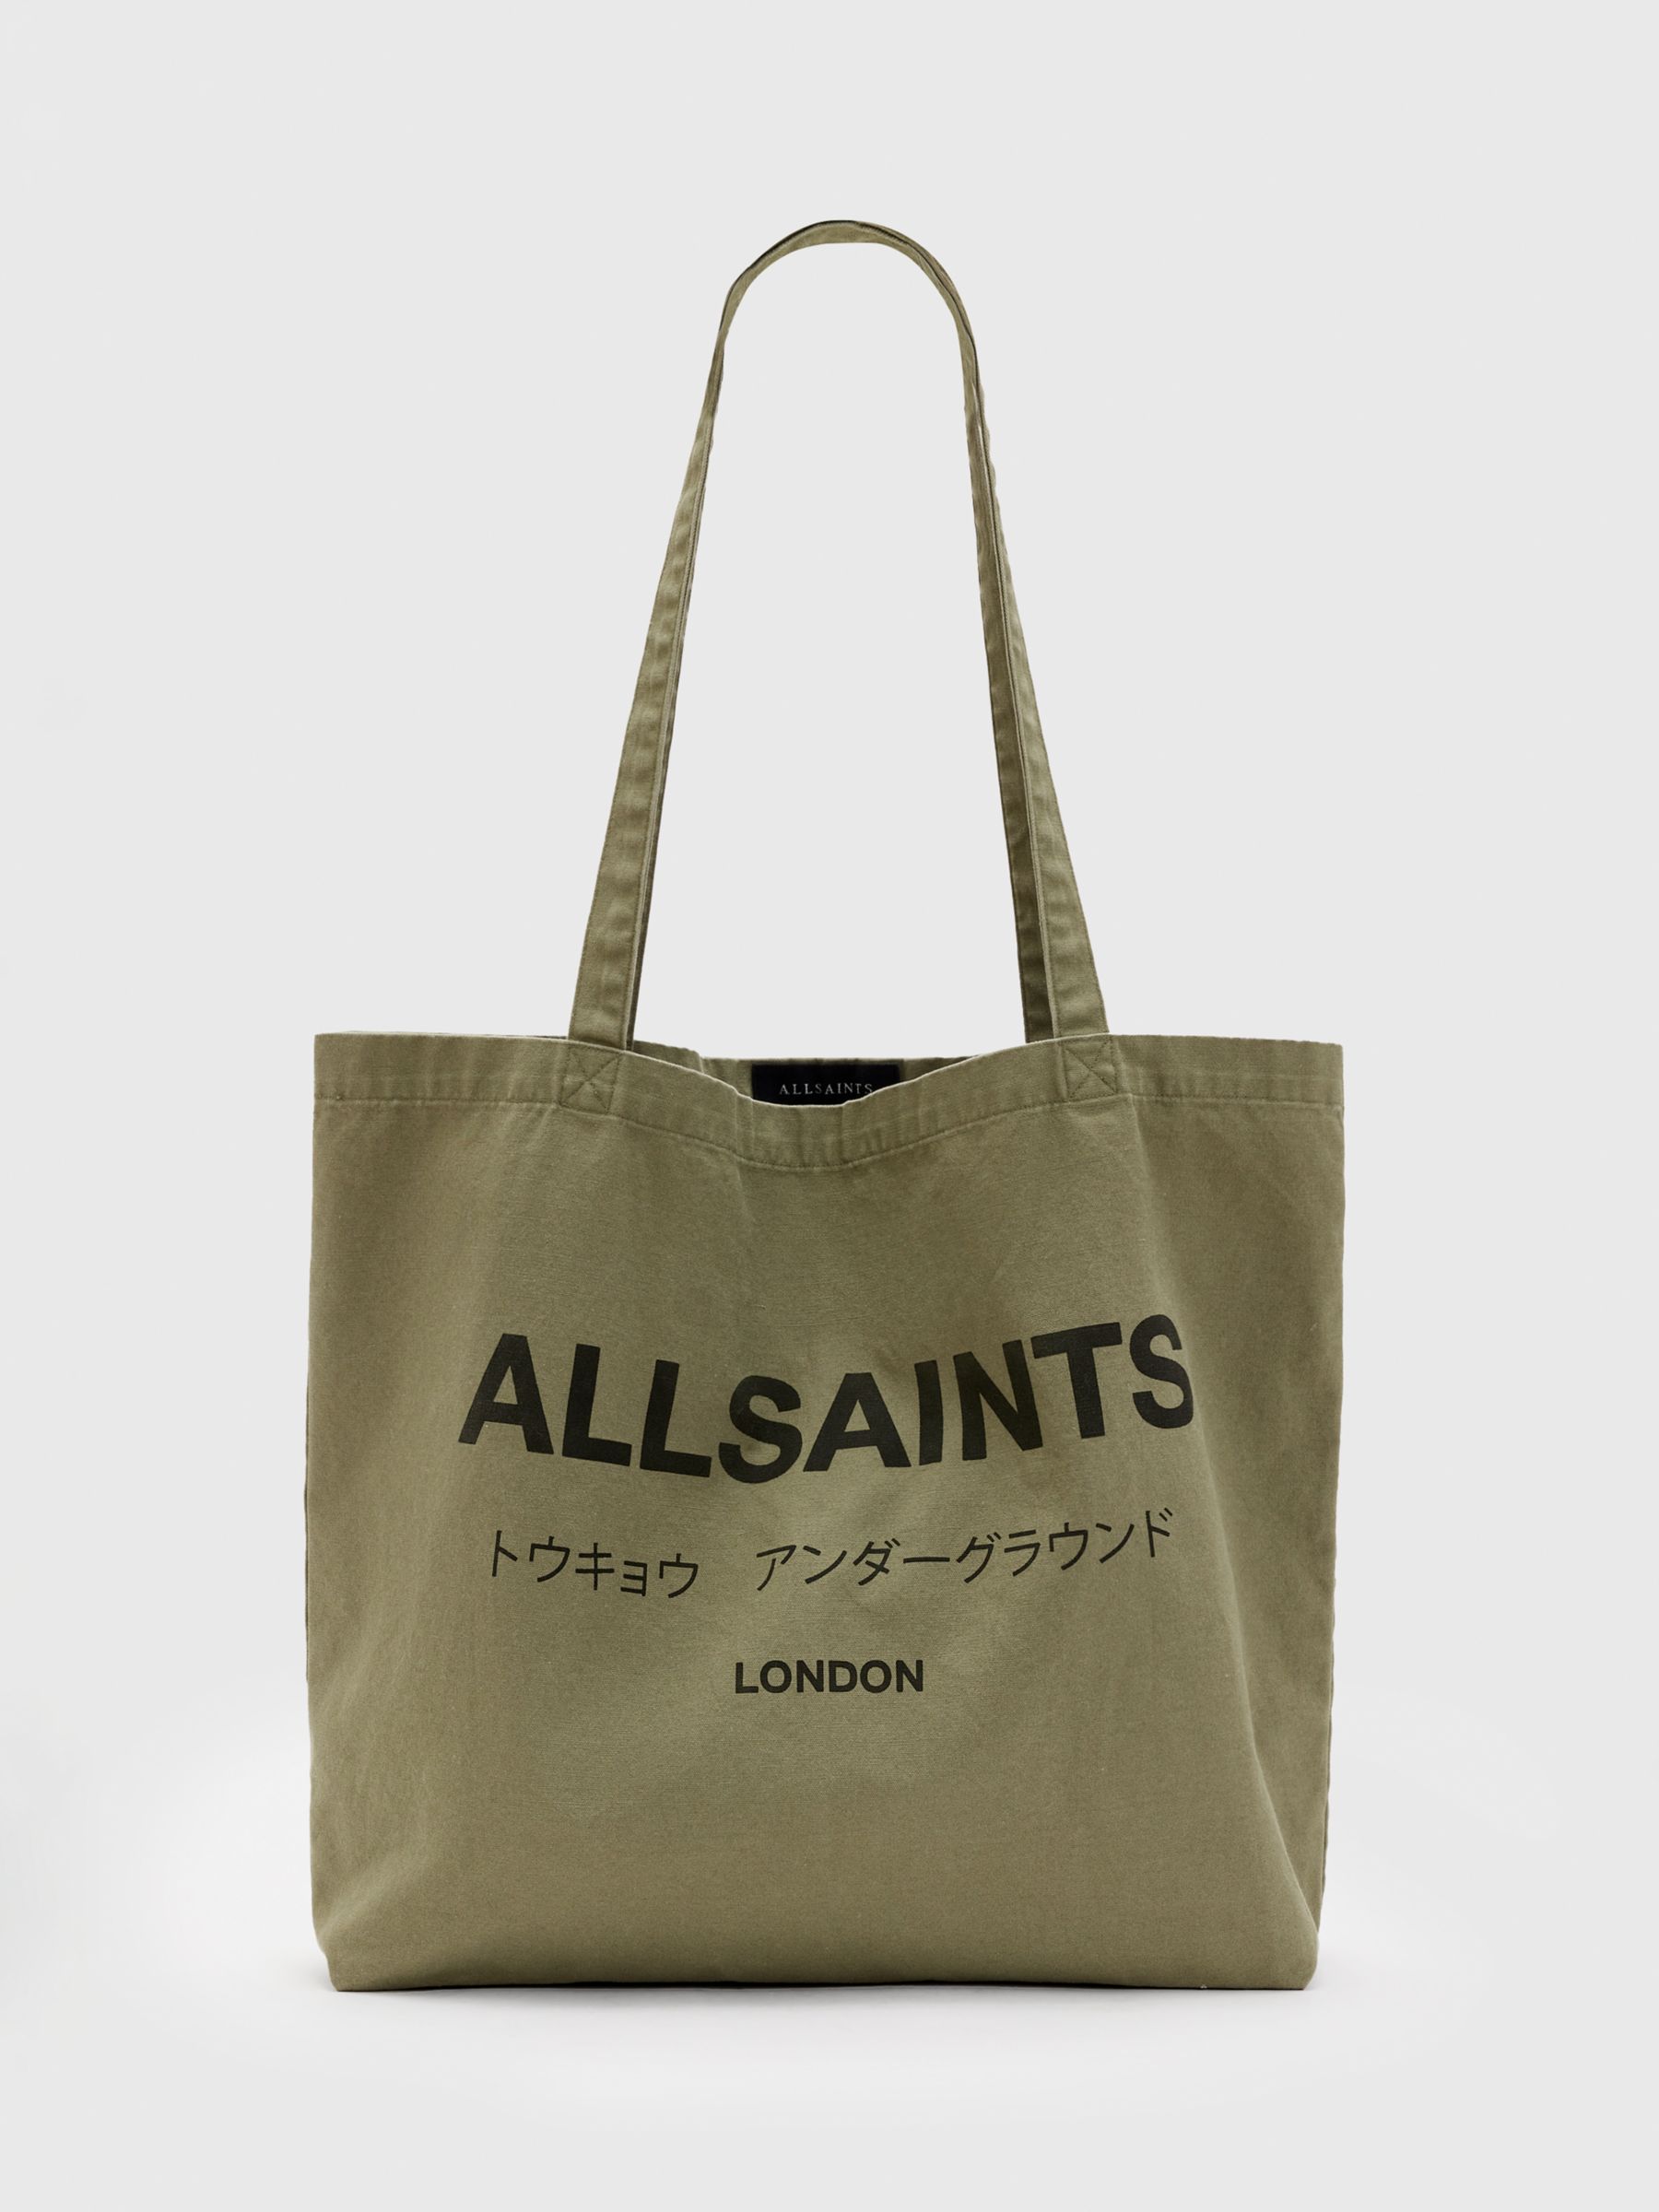 AllSaints Underground Tote Bag, Nori Green/Black at John Lewis & Partners